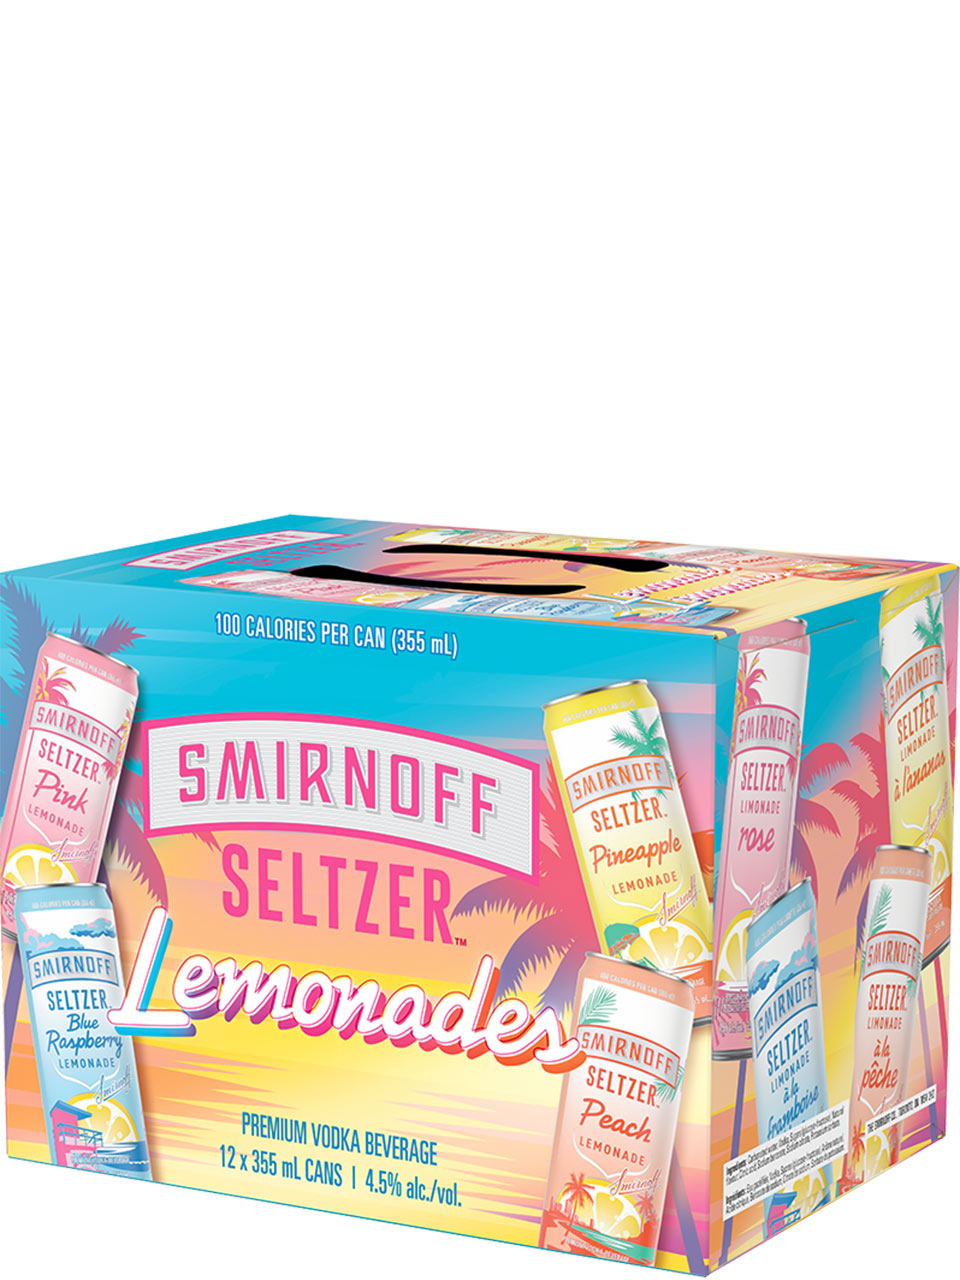 Smirnoff Seltzer Lemonade Variety 12 Pack Cans